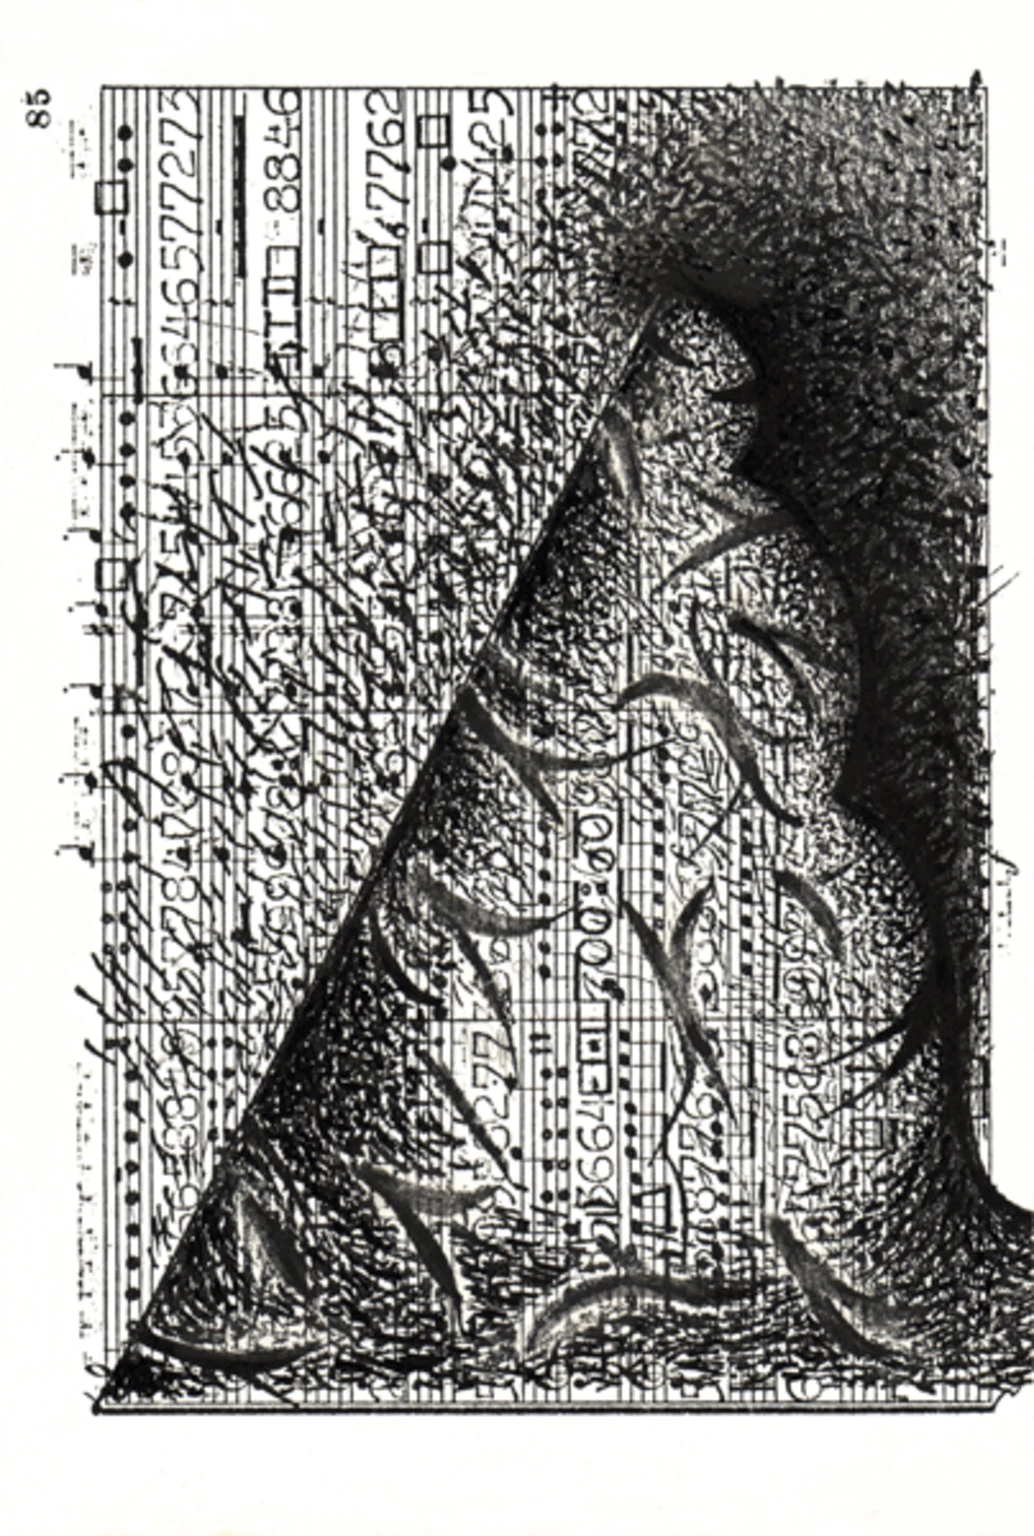 Peaks I., 1987 - paper, clack ink, 18 x 12 cm